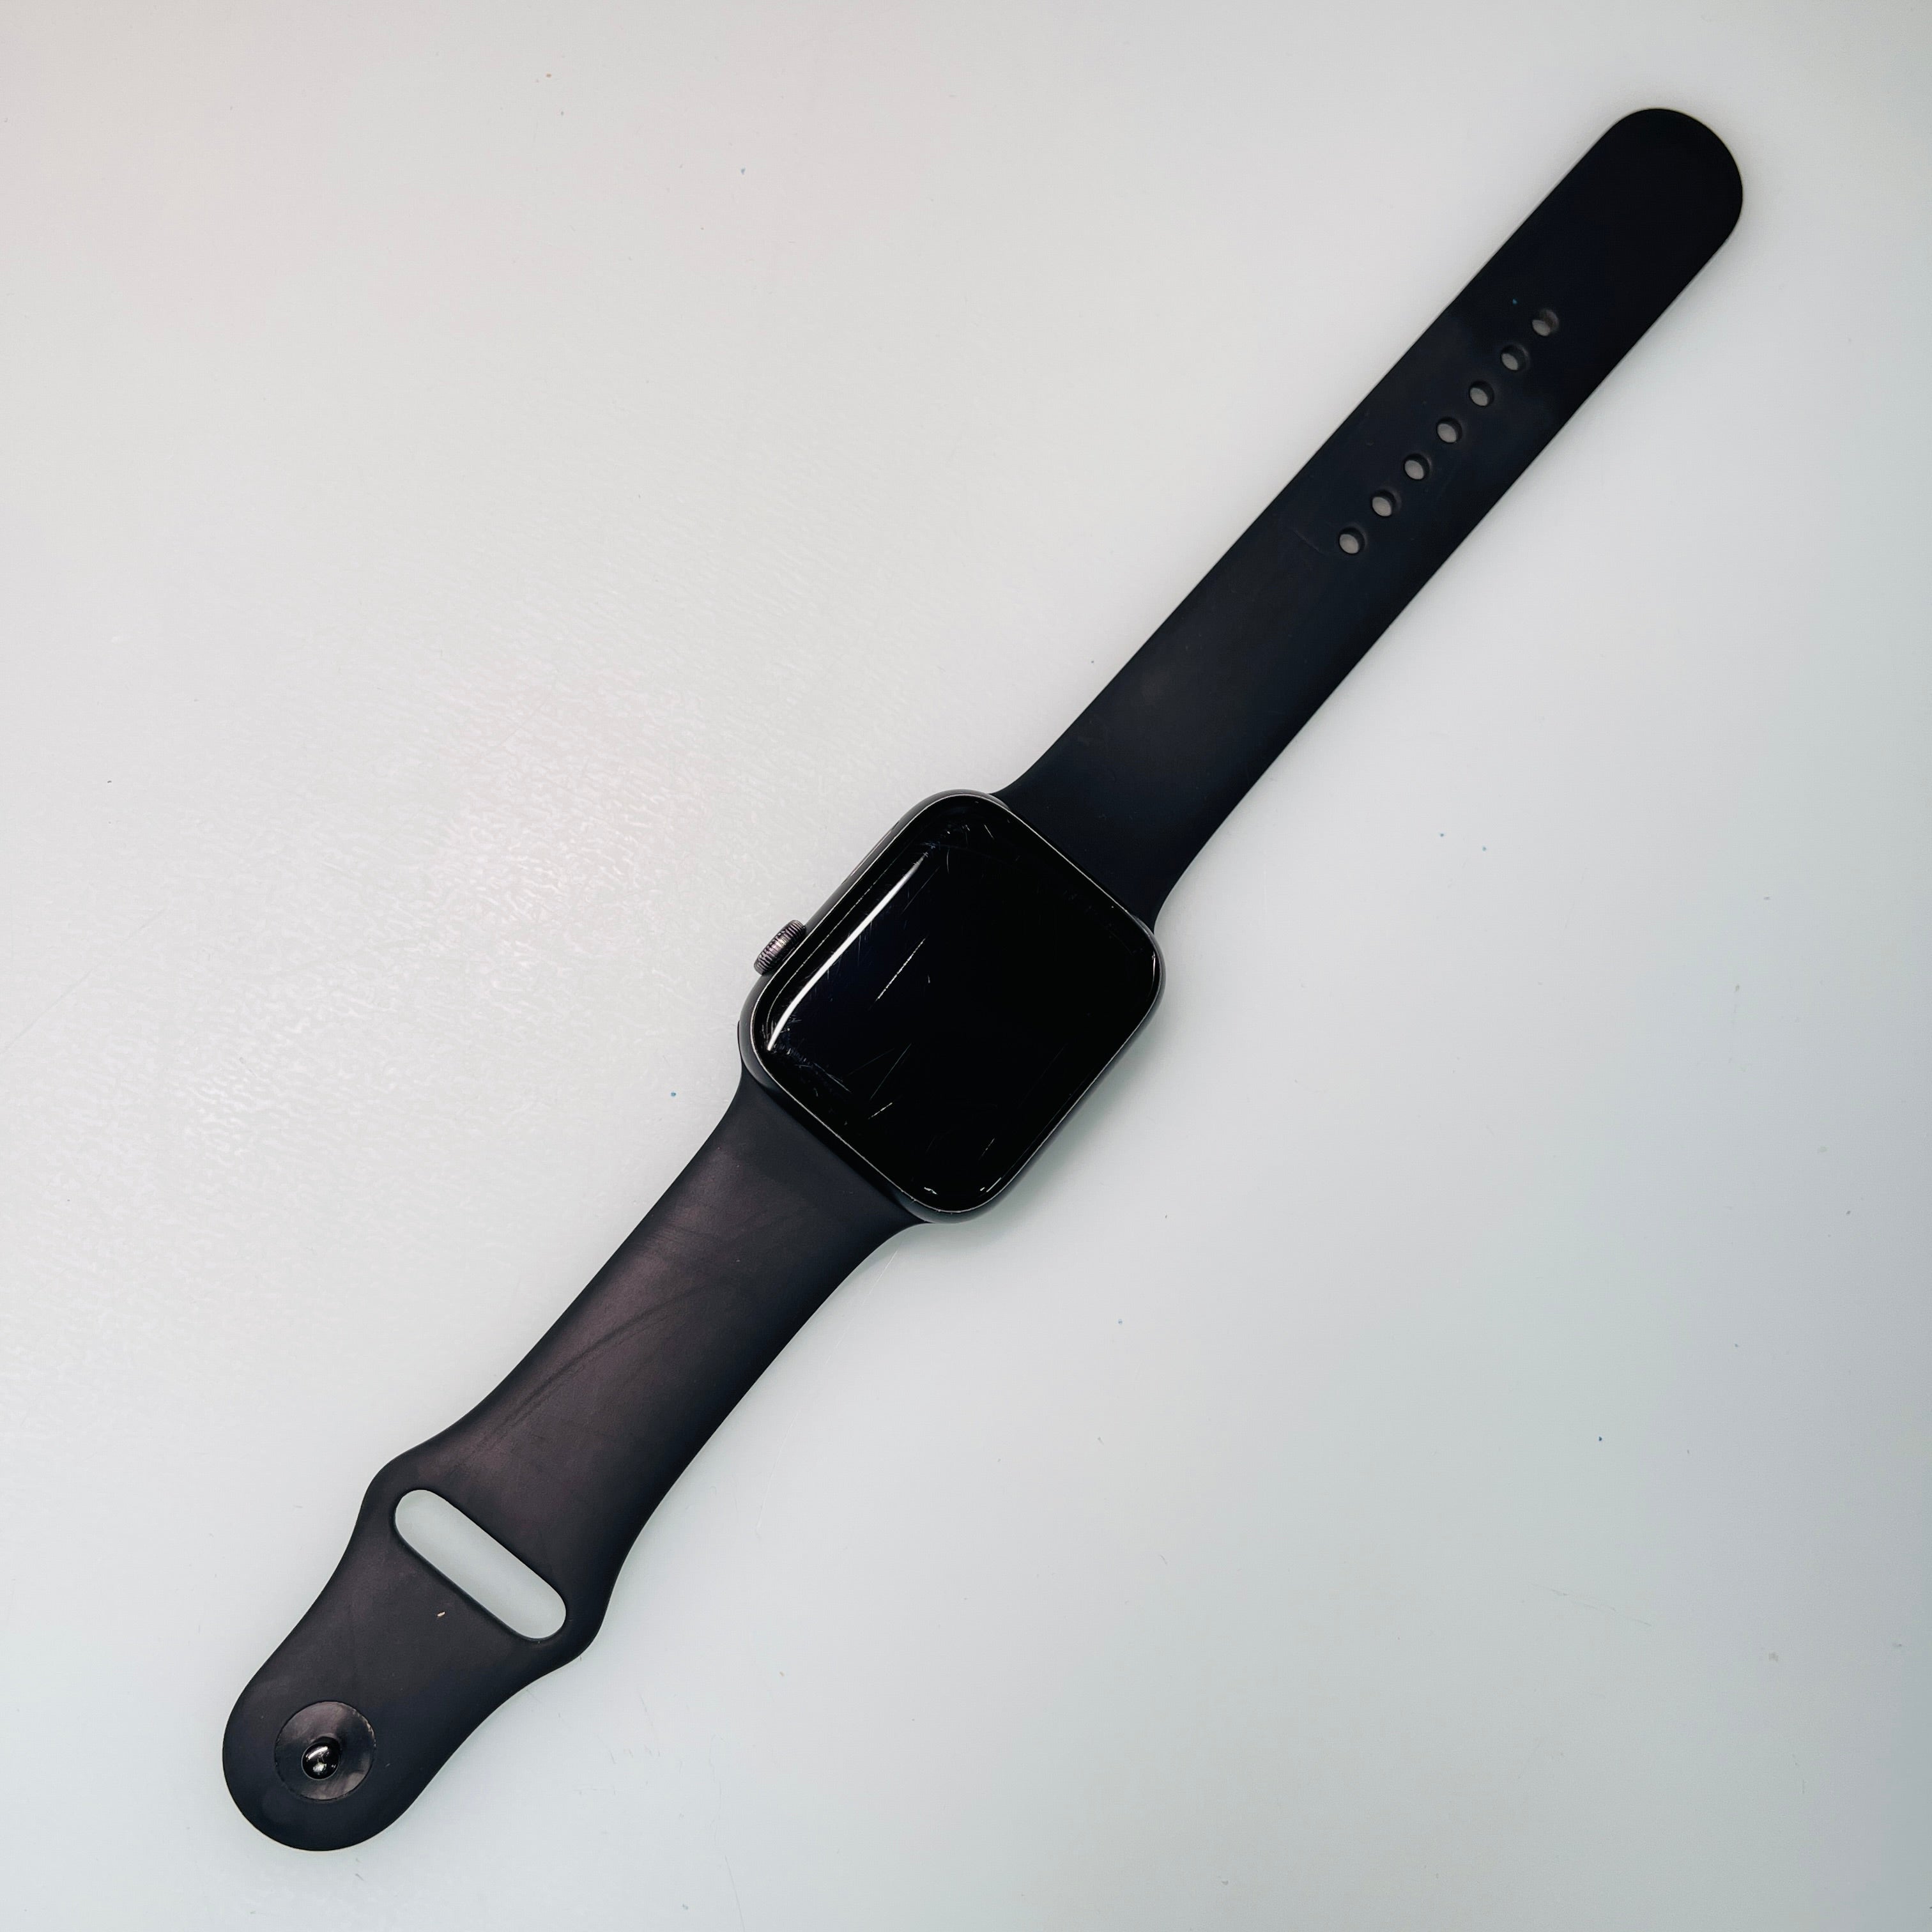 Apple Watch Series 6 GPS Aluminium 44MM Space Grey Good Condition REF#65200